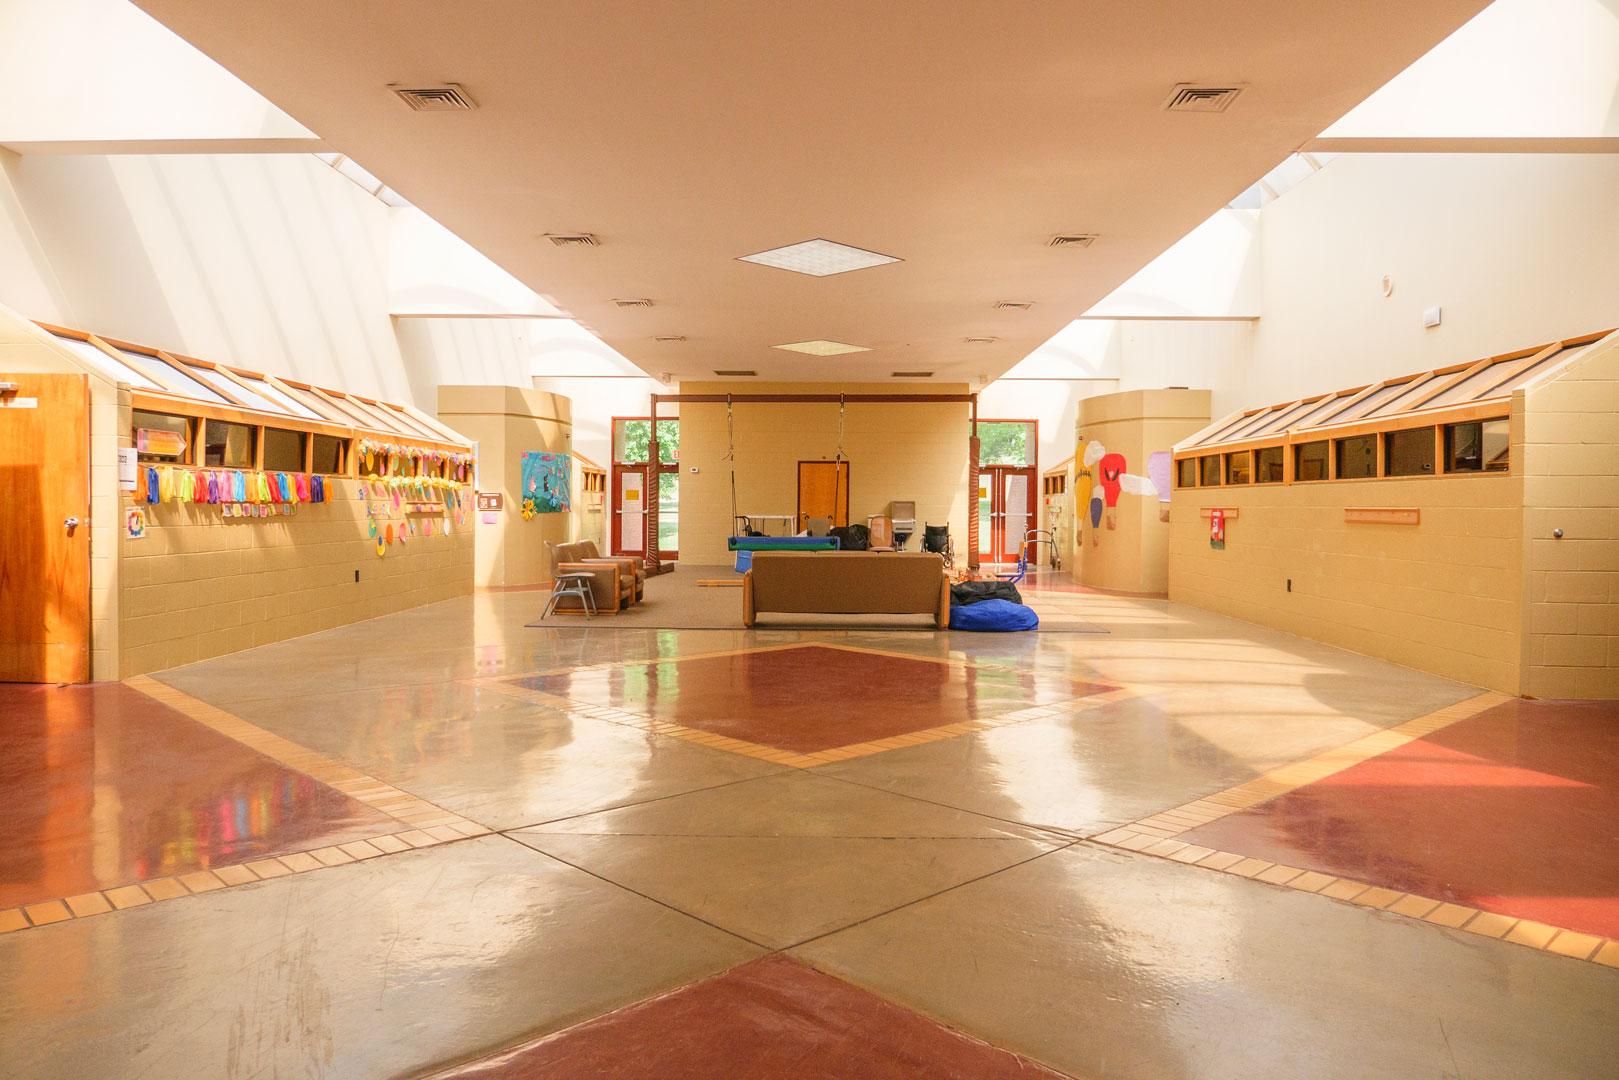 The interior of a school building.